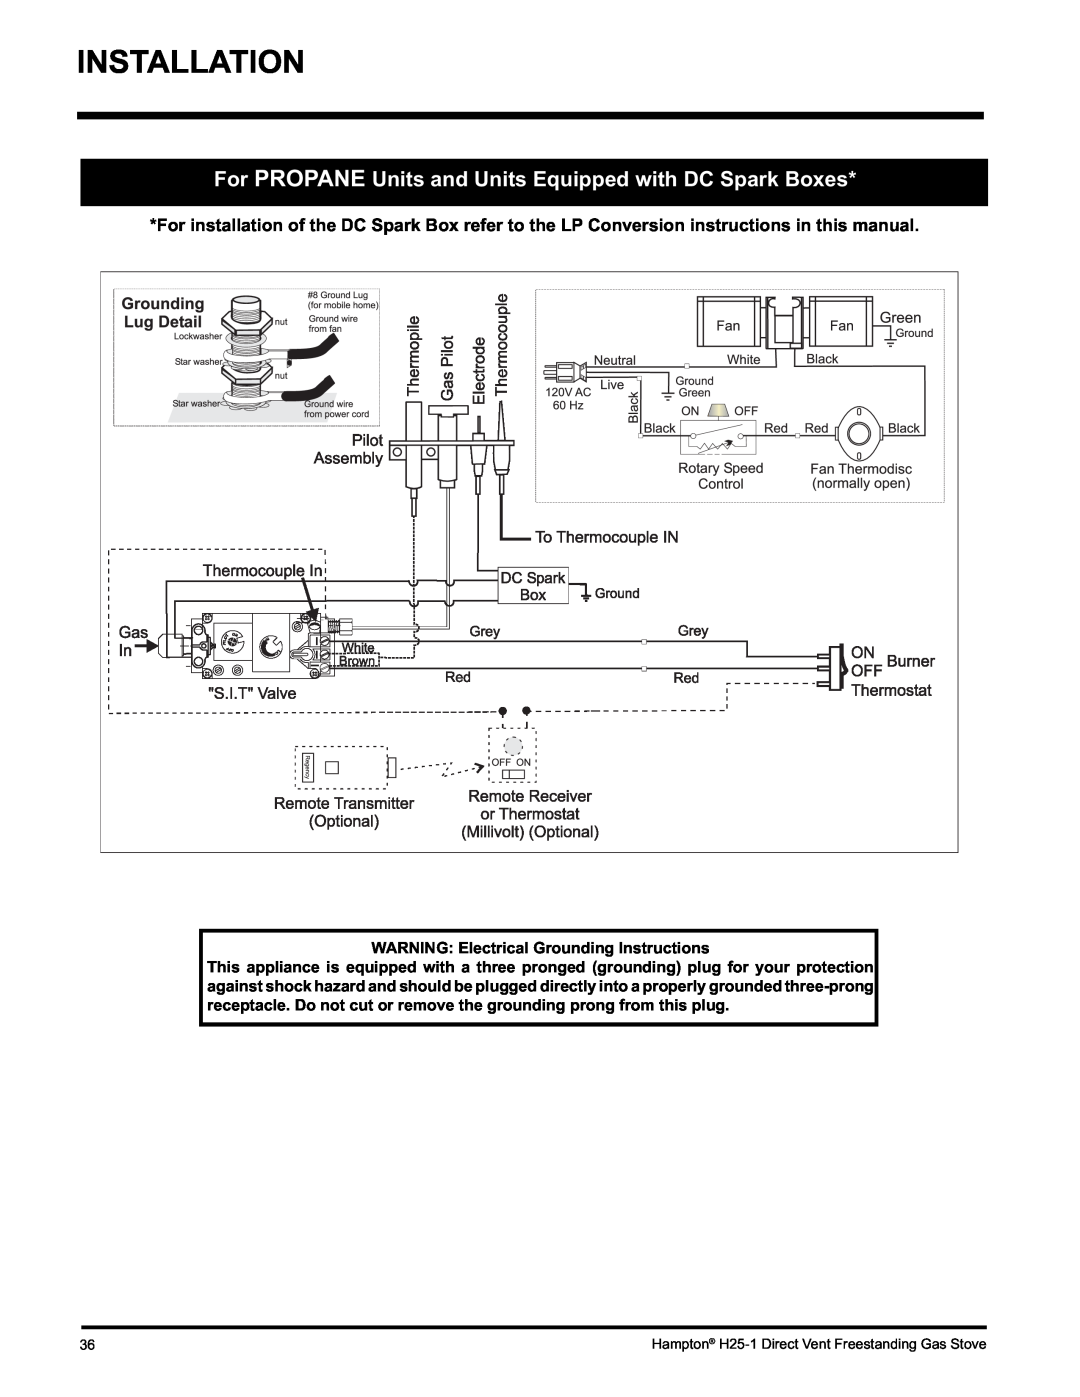 Hampton Direct H25-NG1, H25-LP1, H25-LP1 Propane installation manual WARNING Electrical Grounding Instructions 